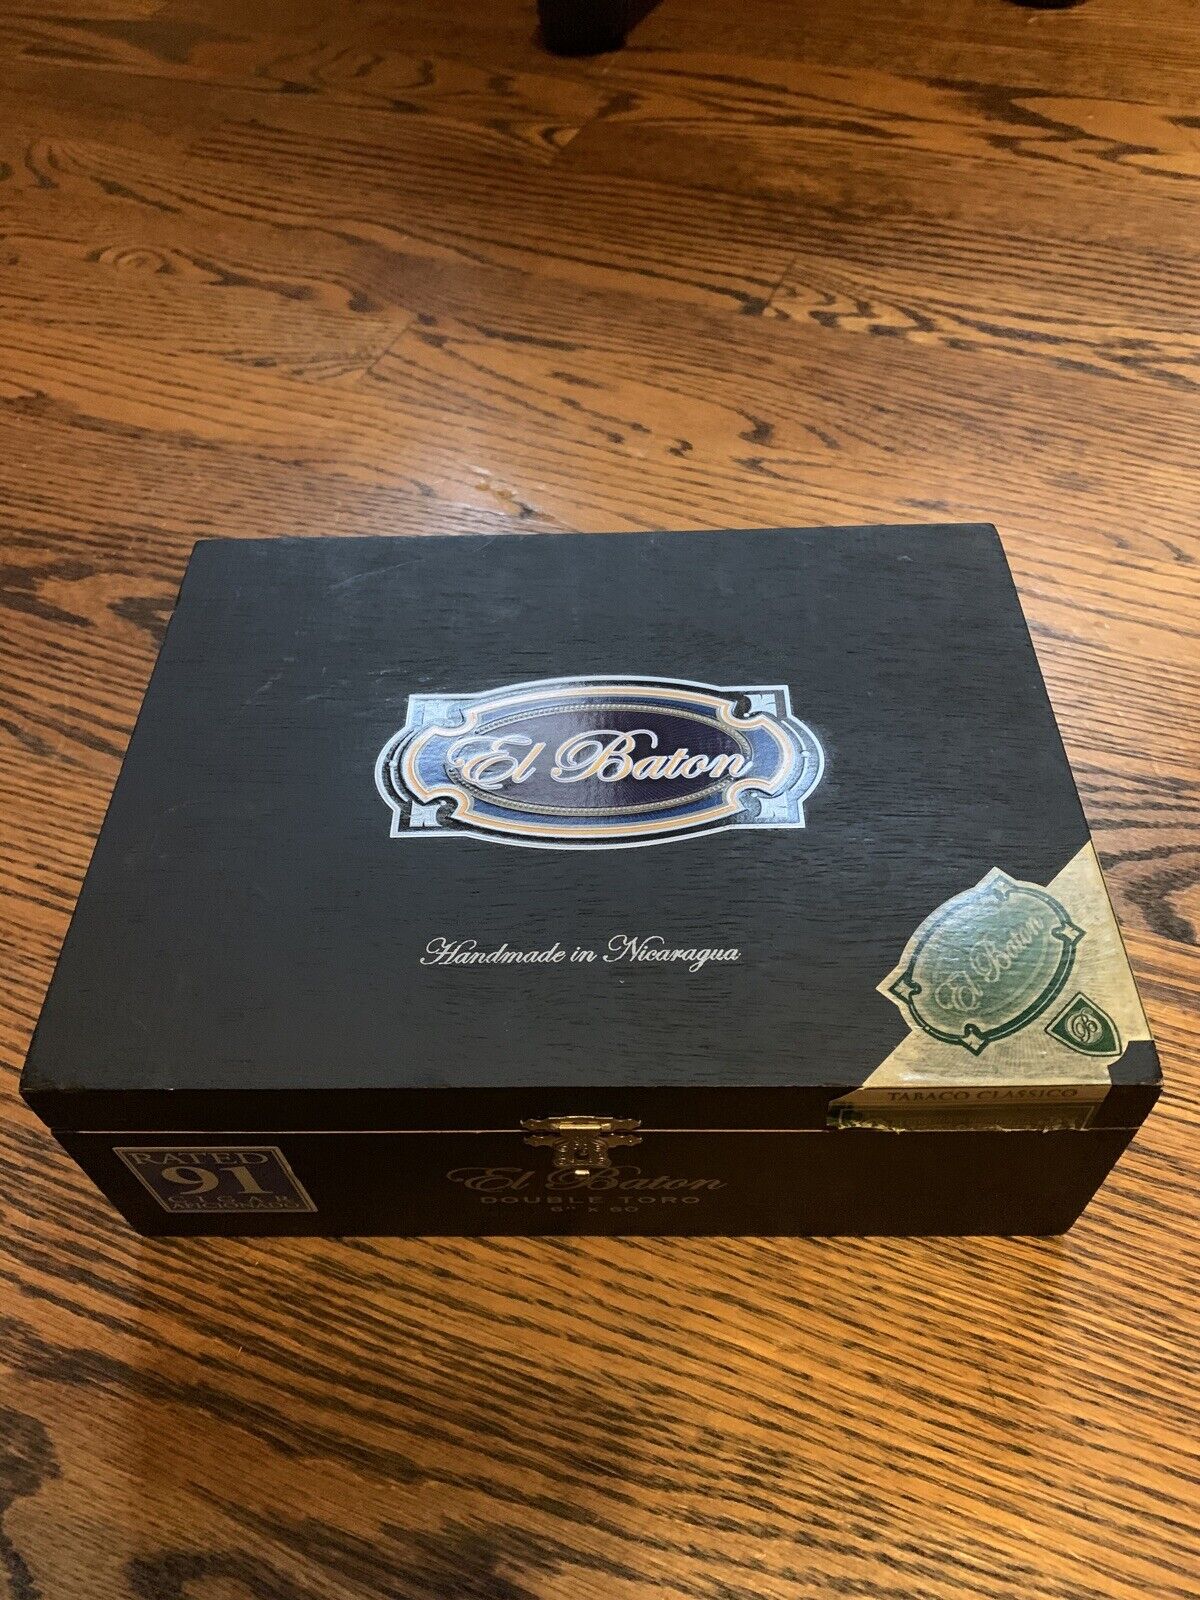 El Baton Nicaraguan Handmade Cigars Black Box 9.25”x7”x3.25” Excellent Condition